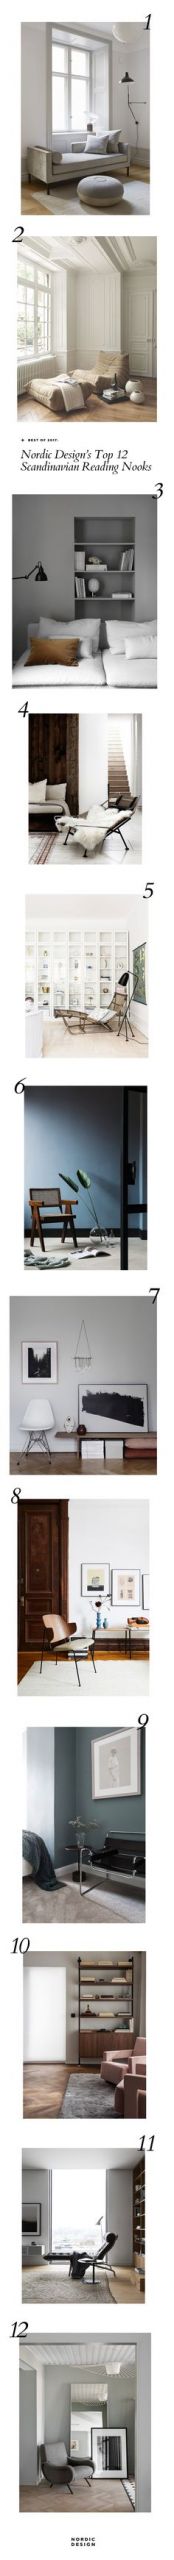 Fauteuil Jardin TressÃ© Best Of 52 Best Design Scandinavian Style Chairs Images